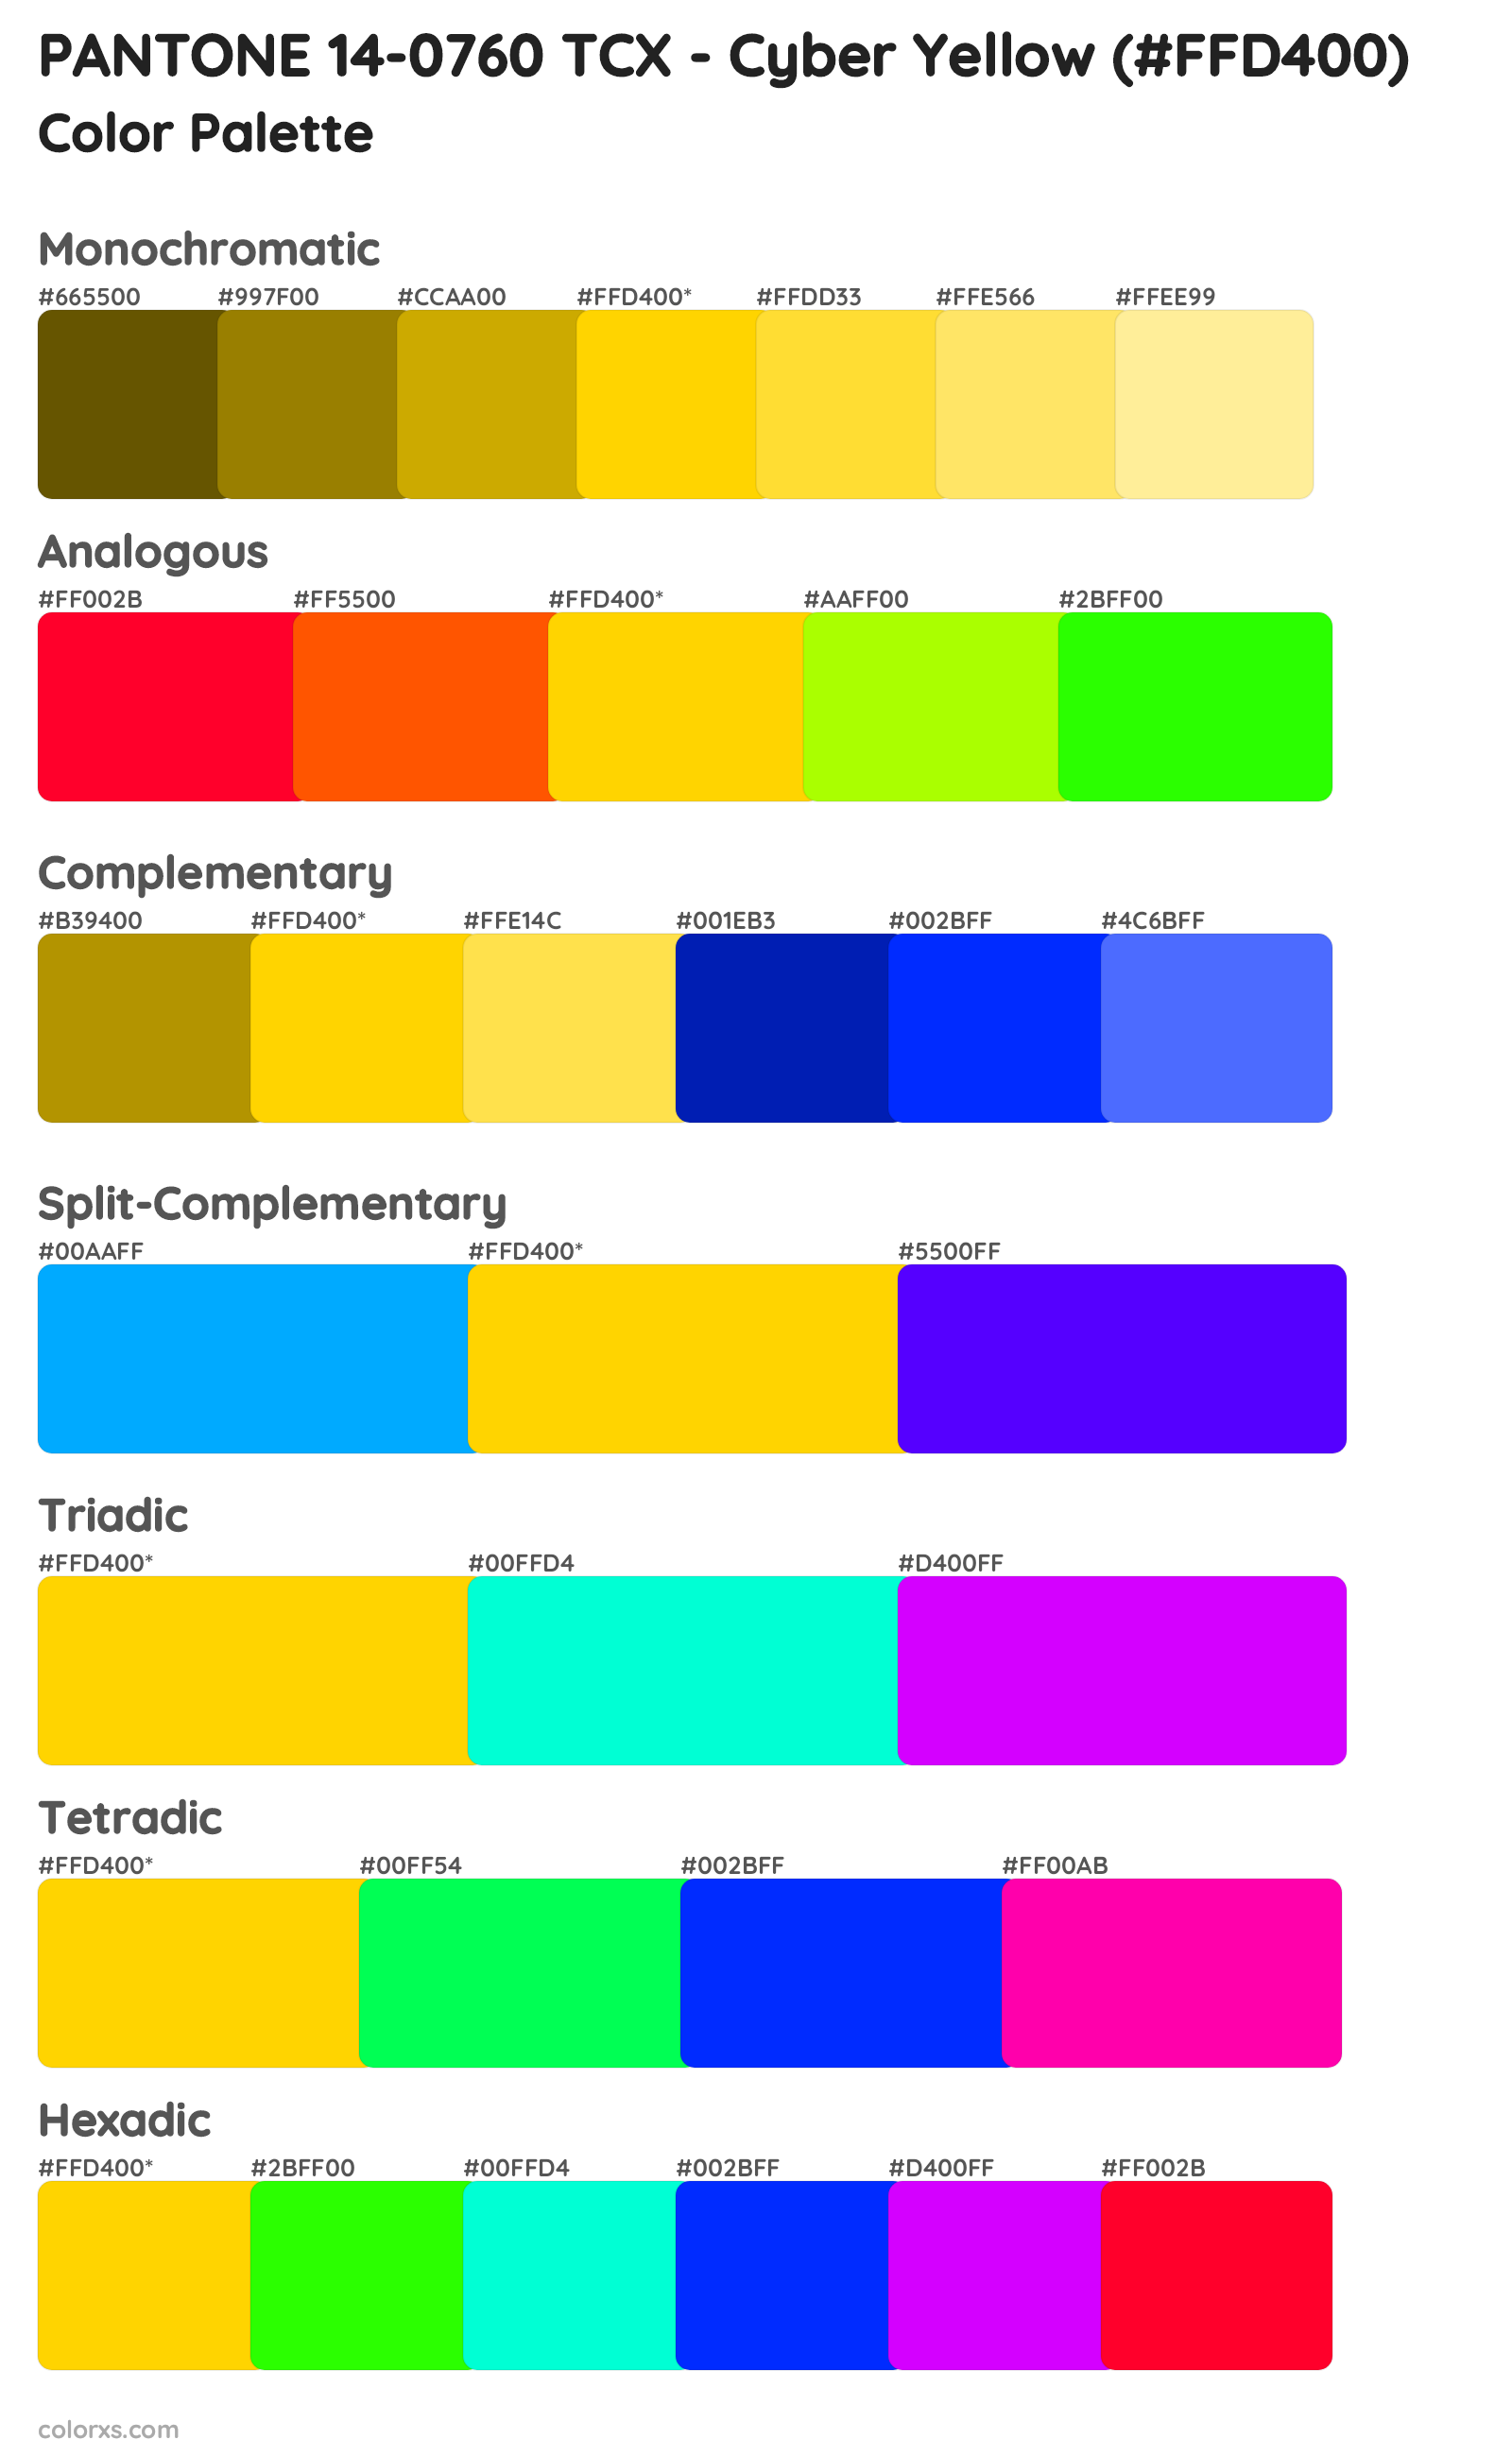 PANTONE 14-0760 TCX - Cyber Yellow Color Scheme Palettes